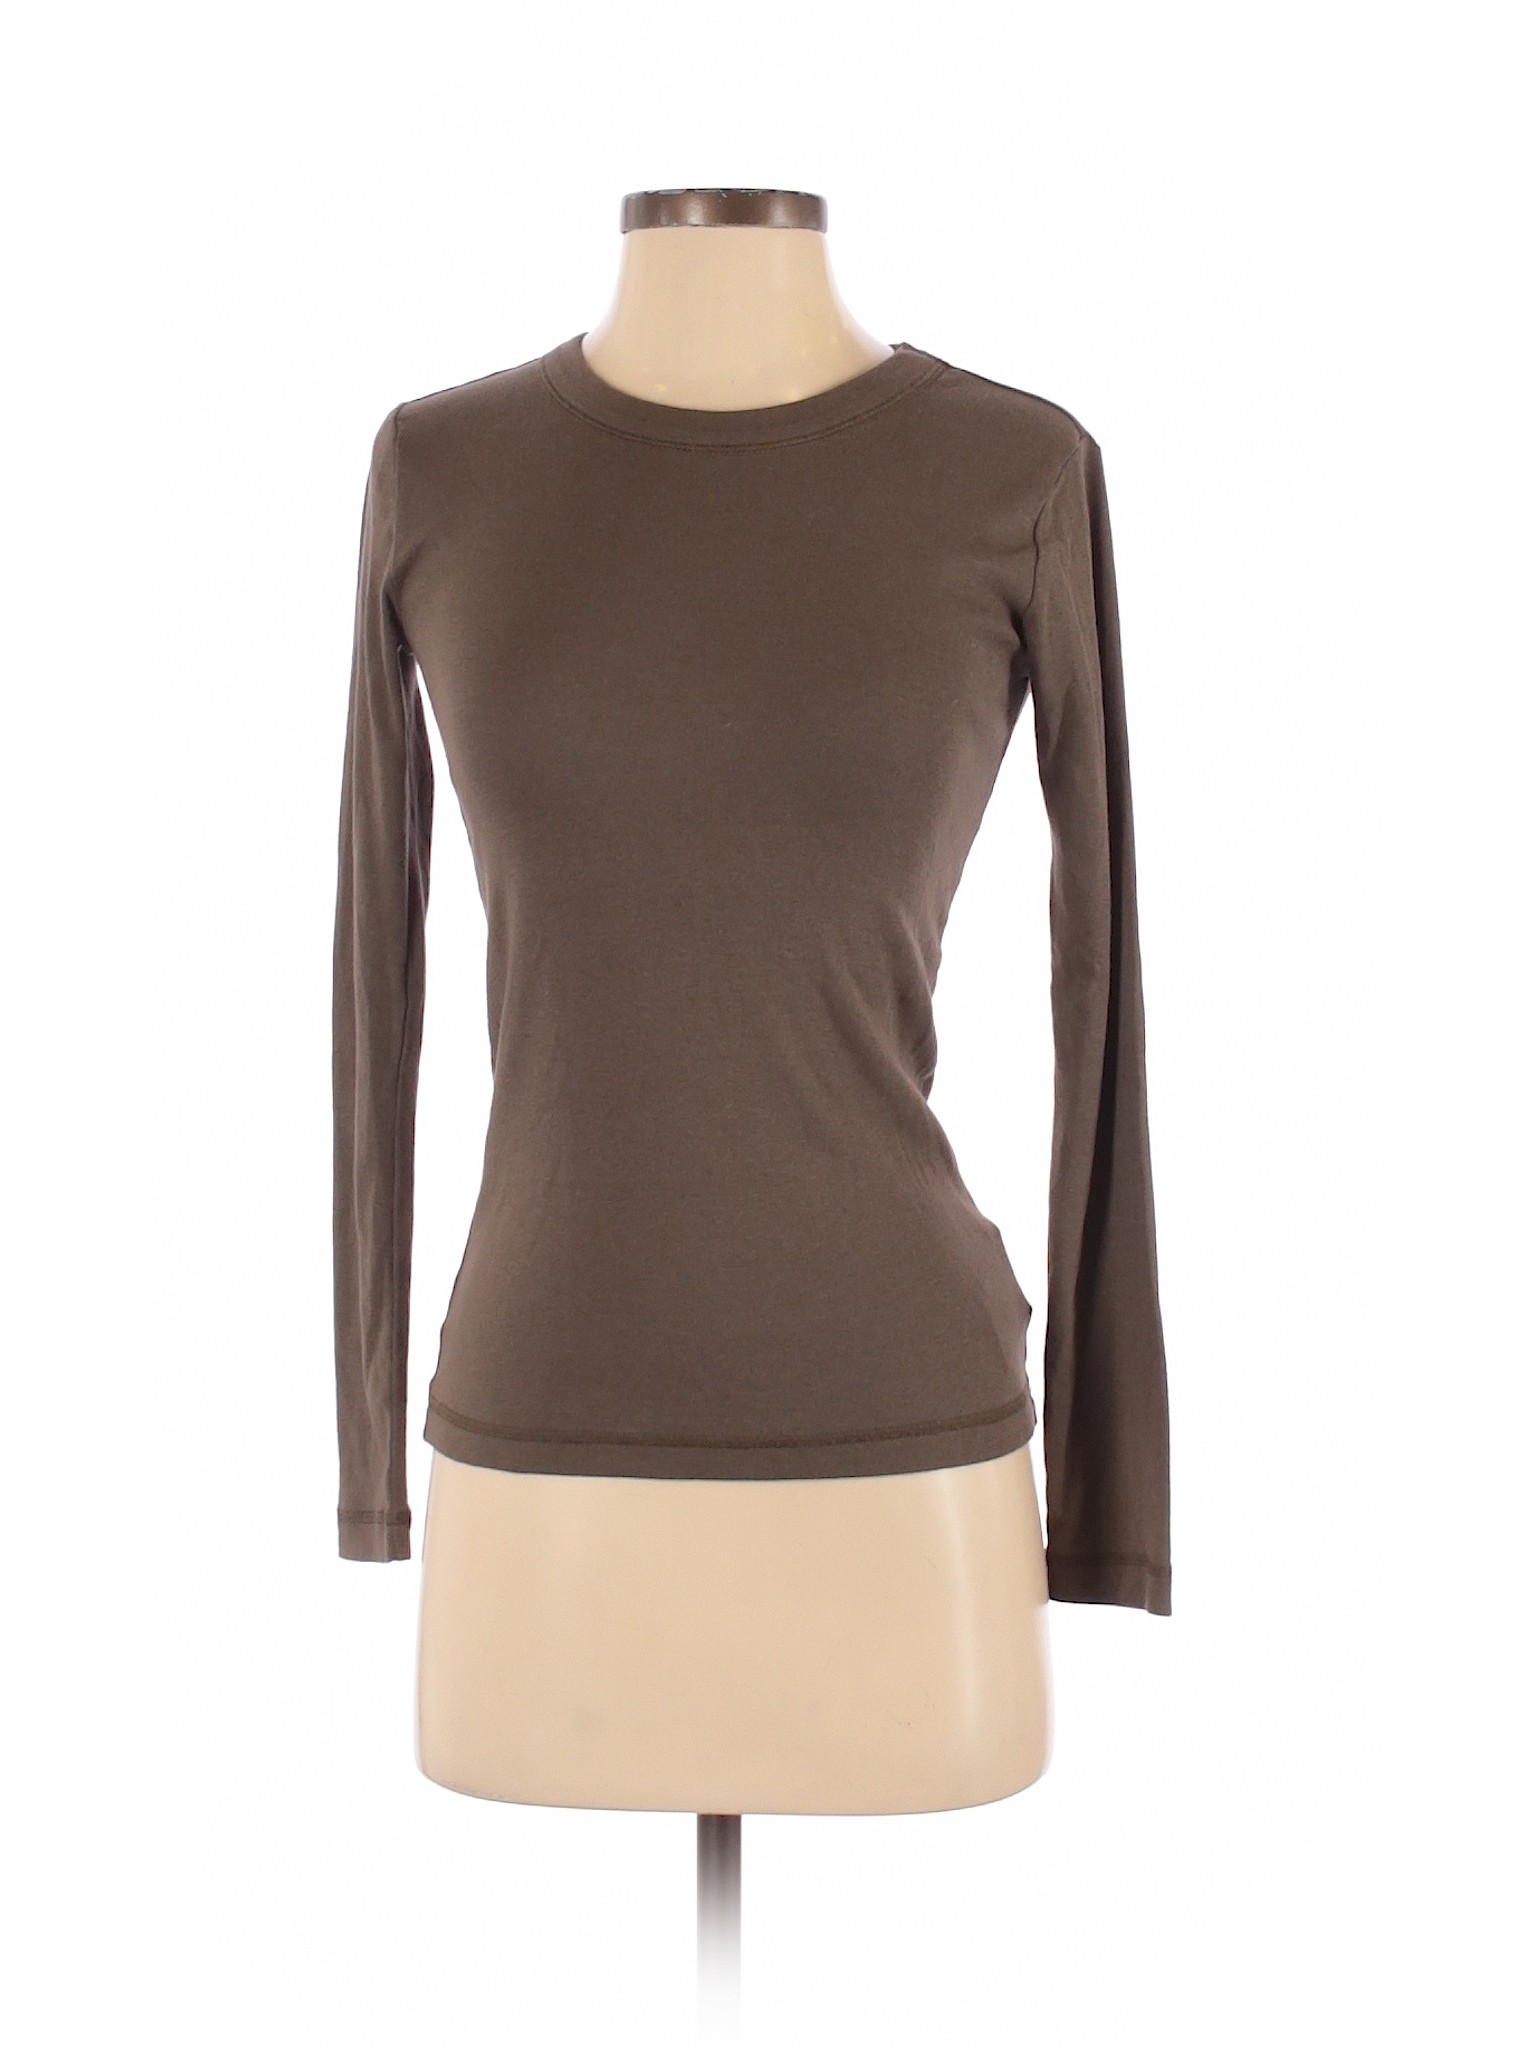 Gap Women Brown Long Sleeve T-Shirt XS | eBay